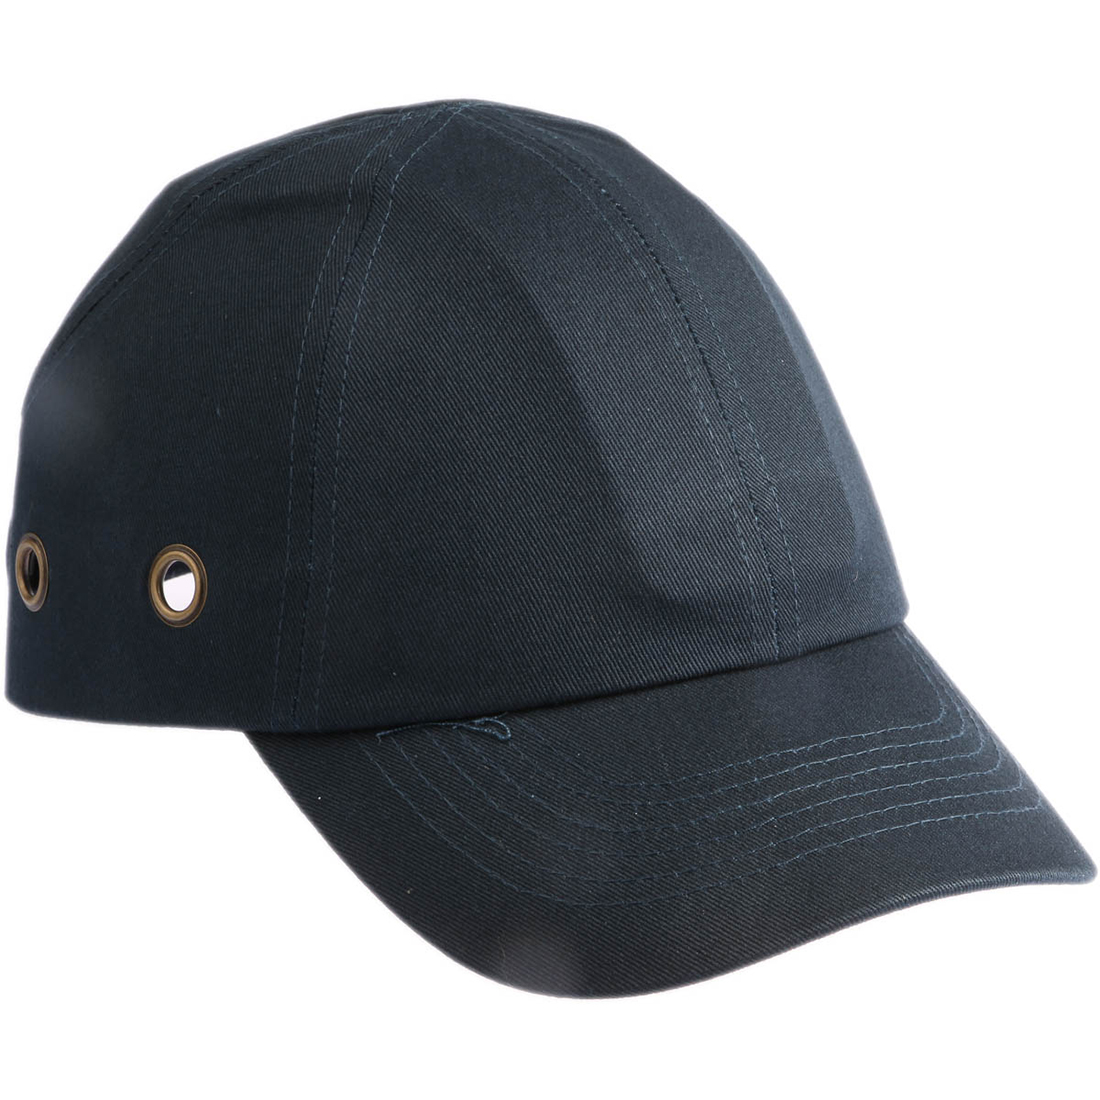 RS PRO Navy Long Bump Cap, ABS Protective Material